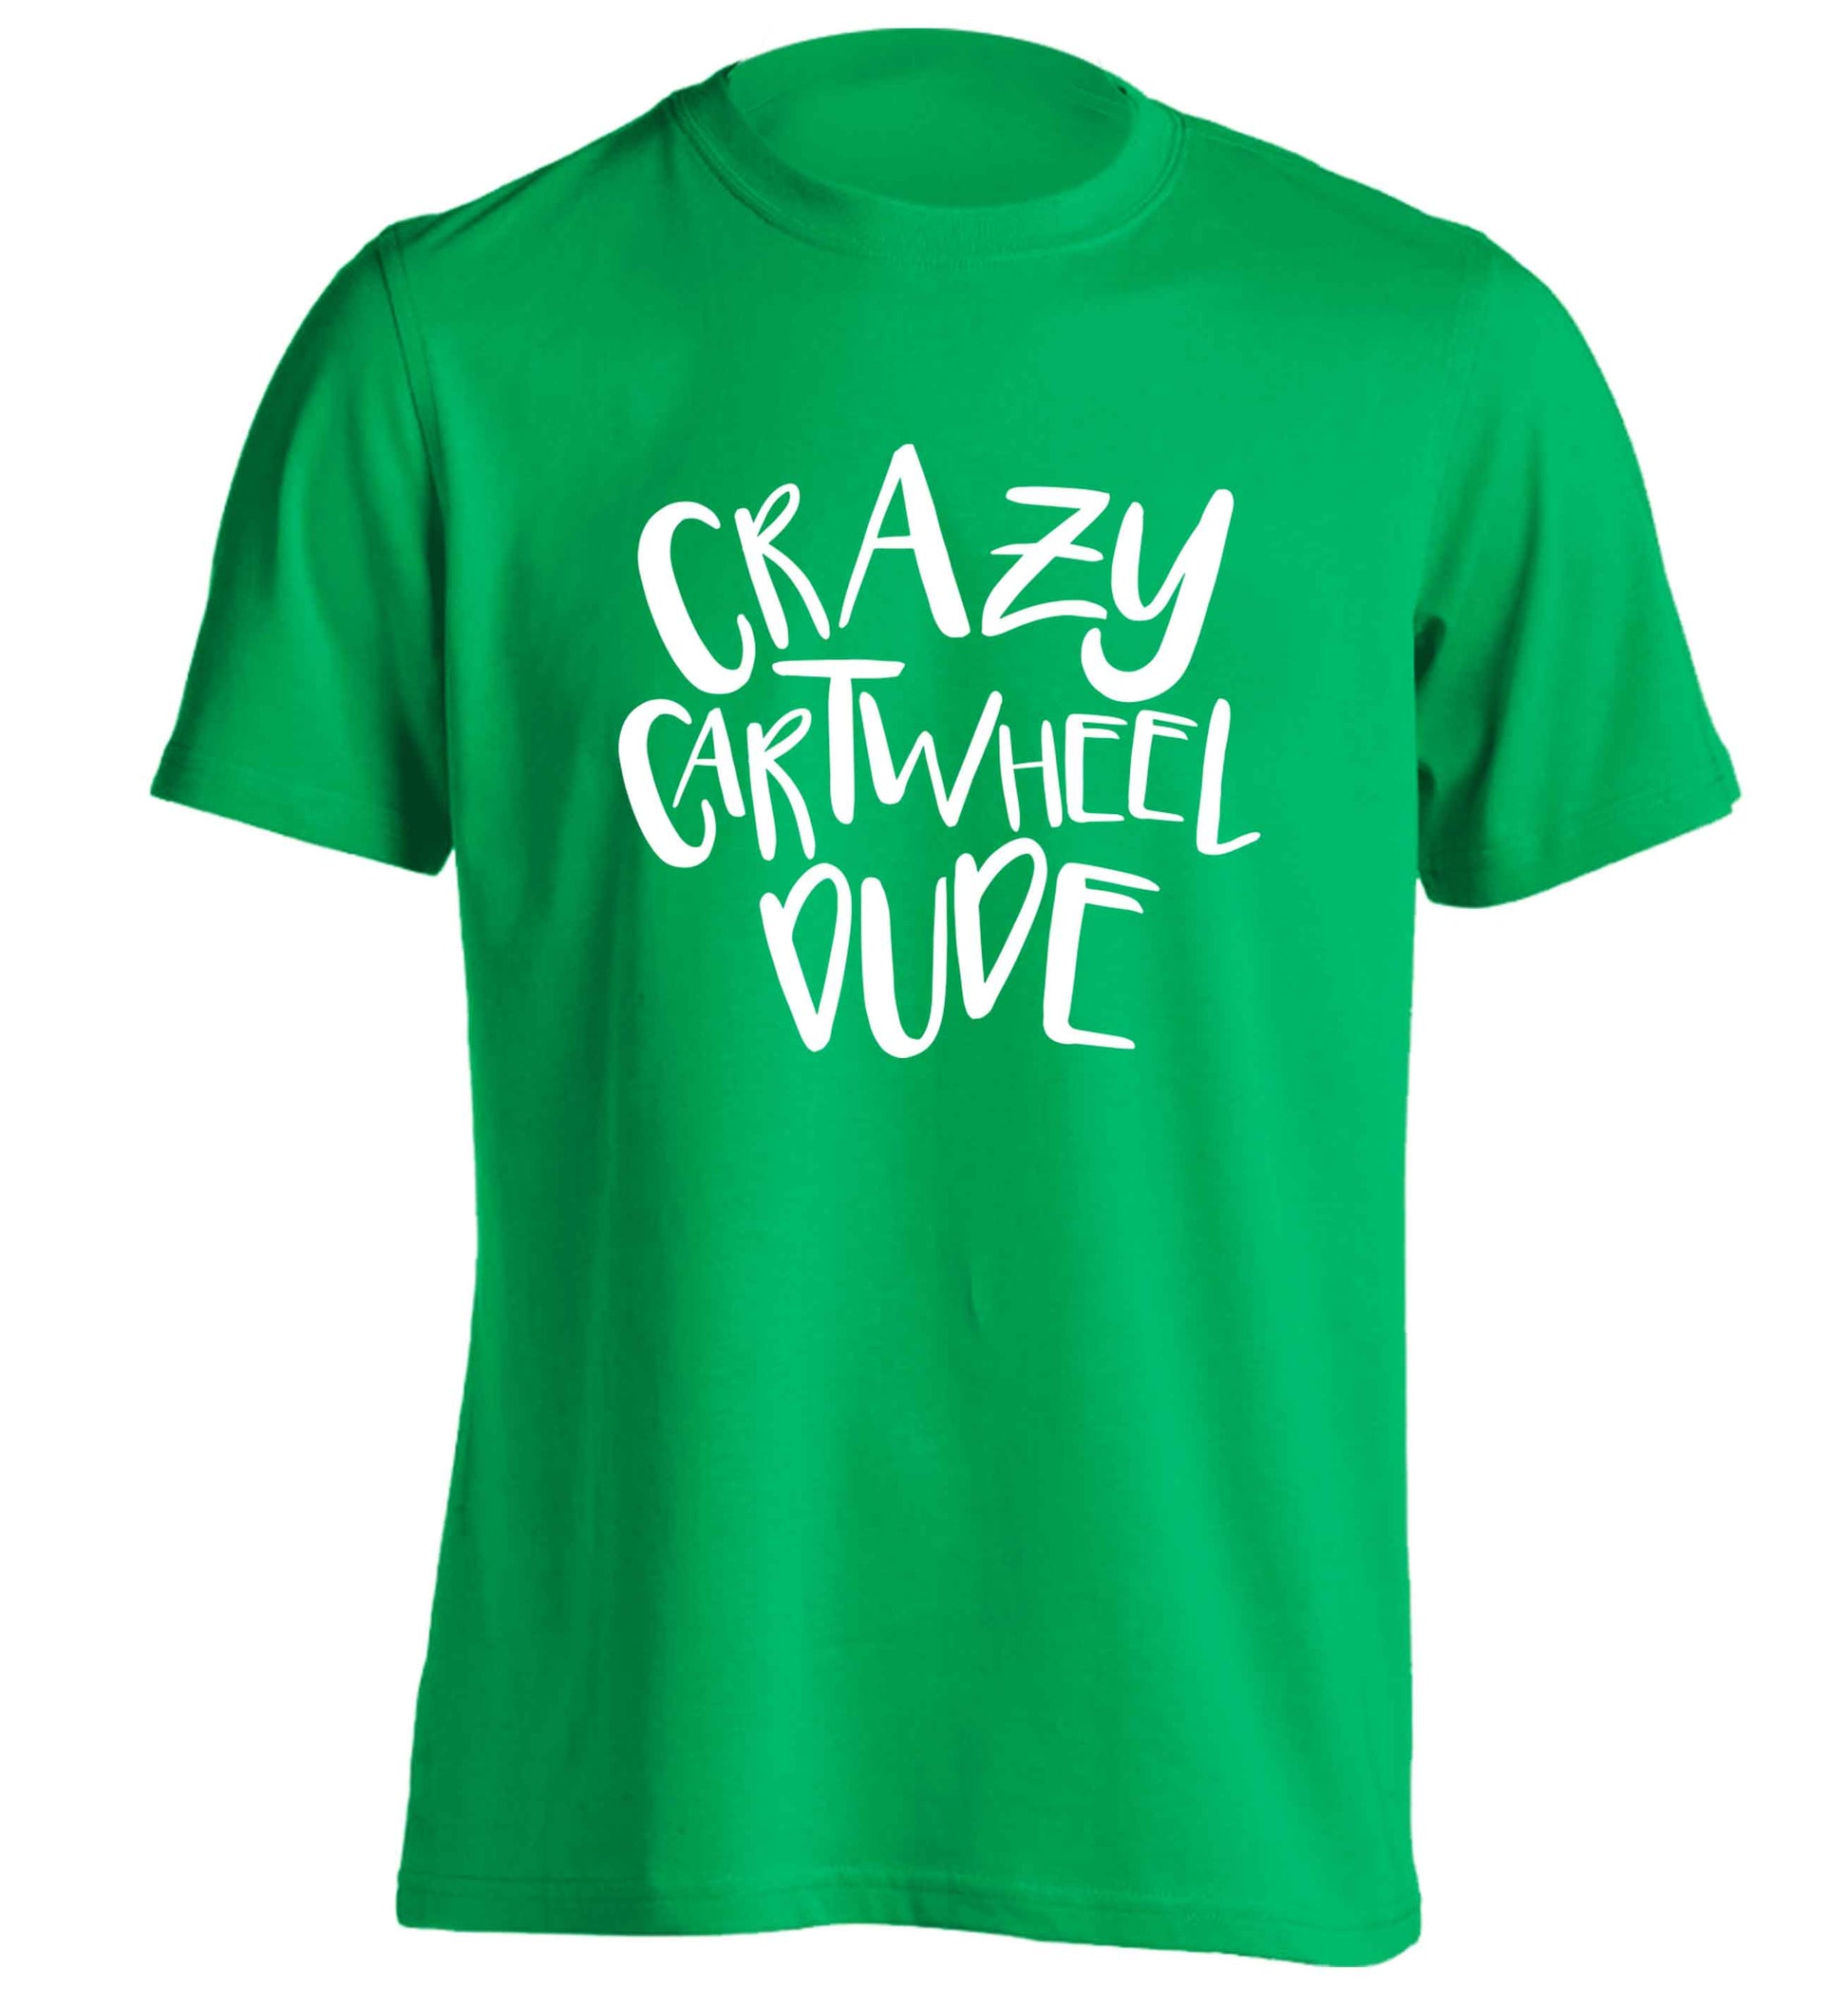 Crazy cartwheel dude adults unisex green Tshirt 2XL